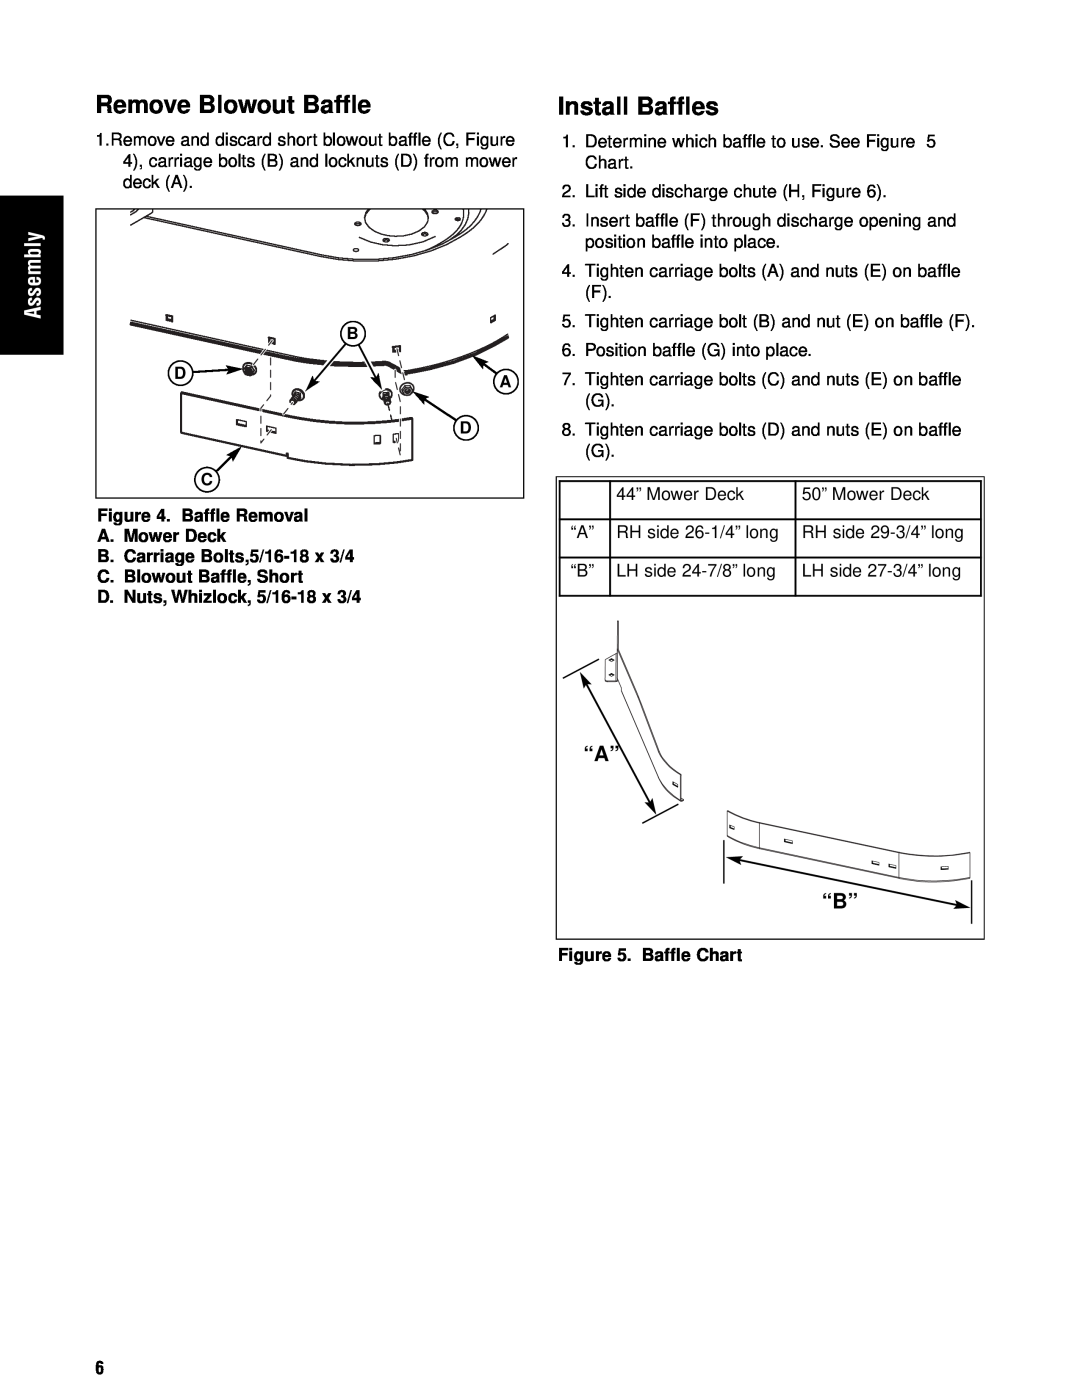 Briggs & Stratton 1695354 manual Remove Blowout Baffle, Install Baffles, “A” “B”, Assembly 